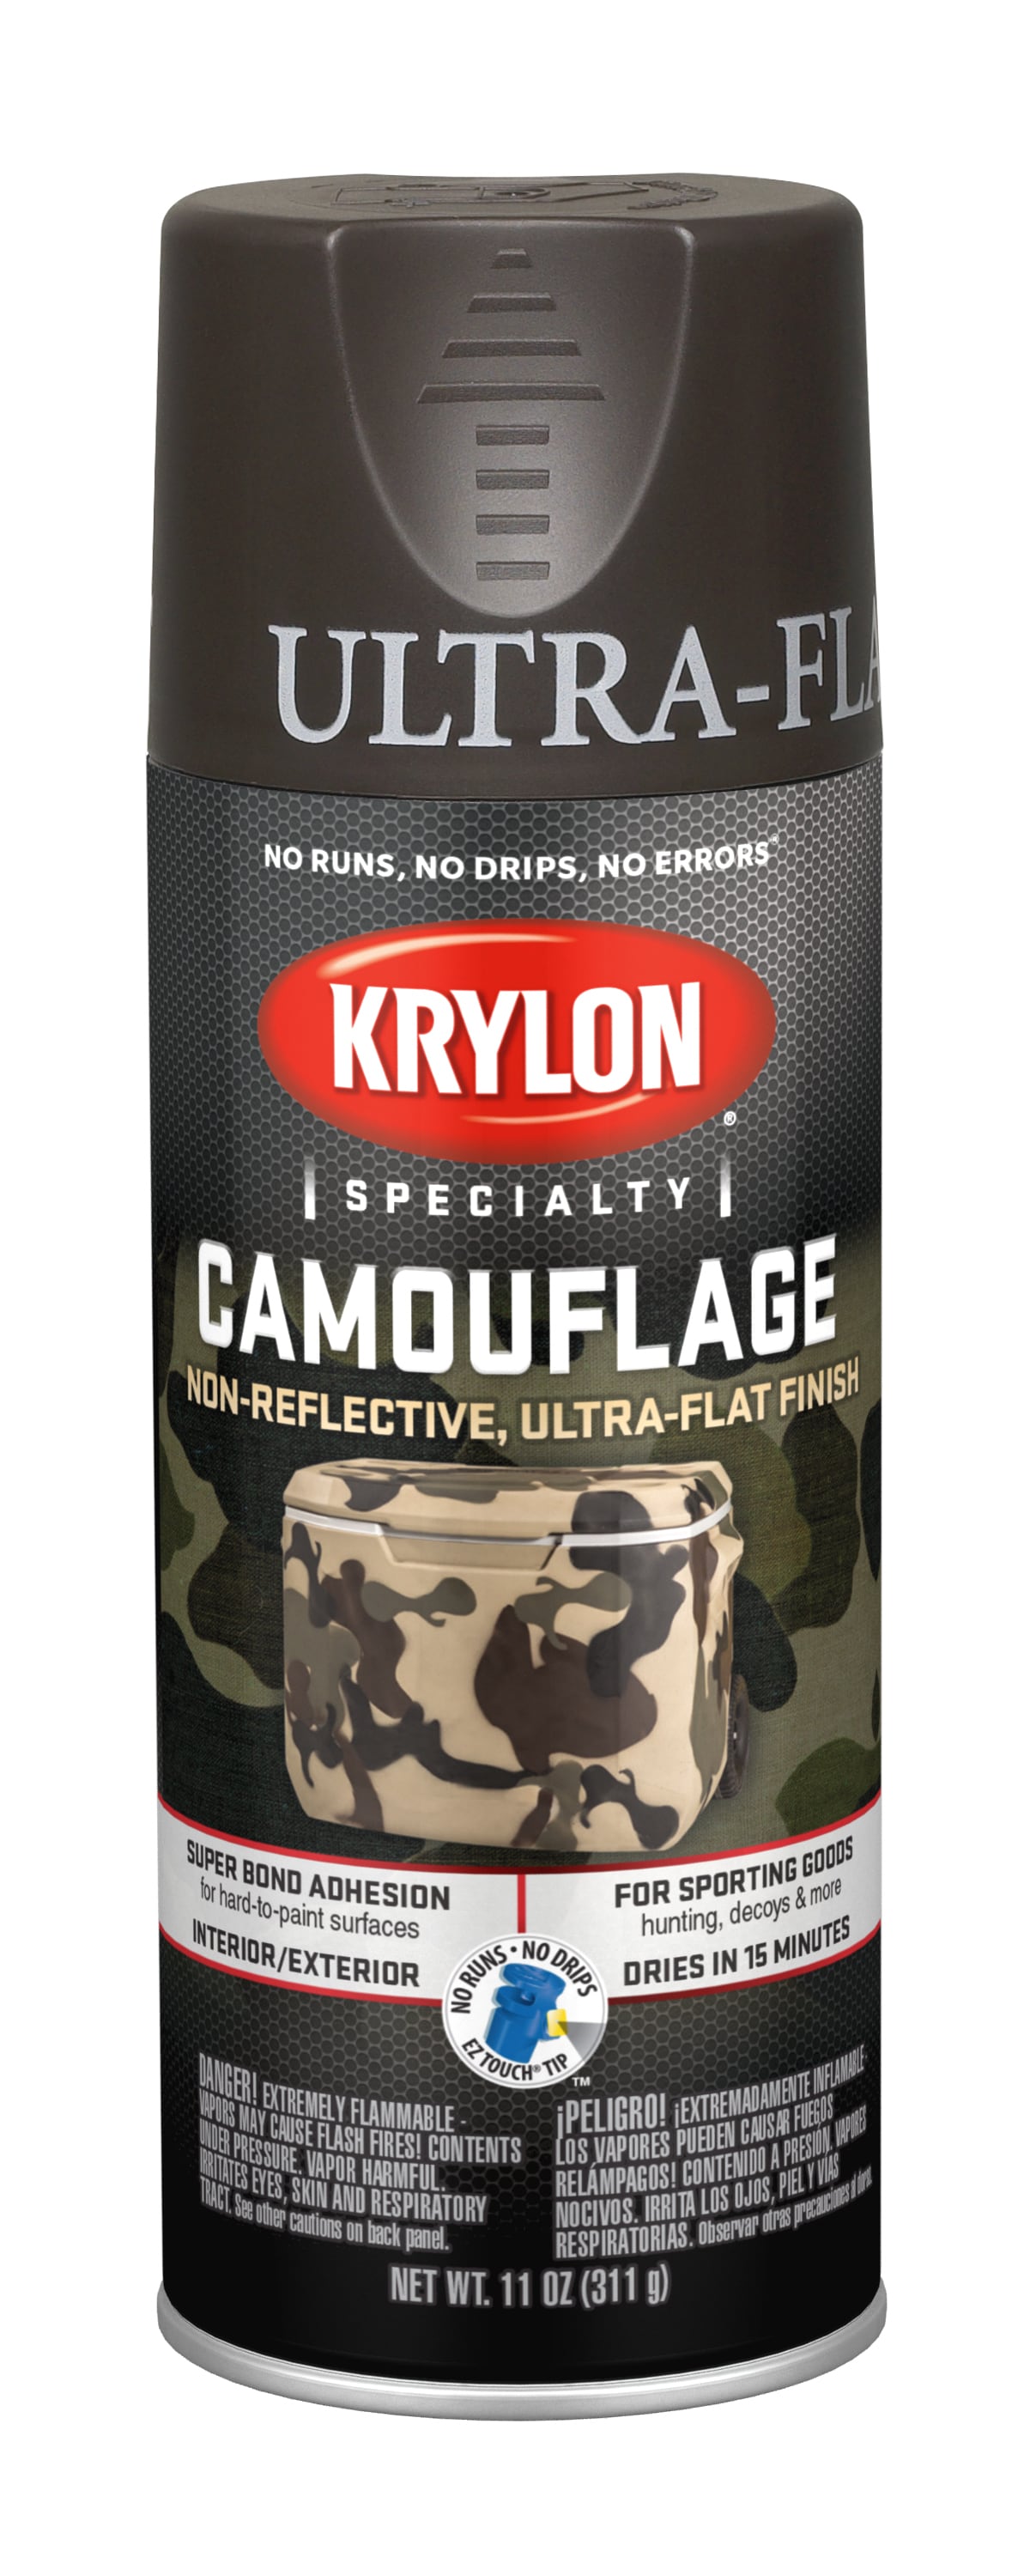 Review of krylon versus Rust-Oleum, camouflage spray paint. 